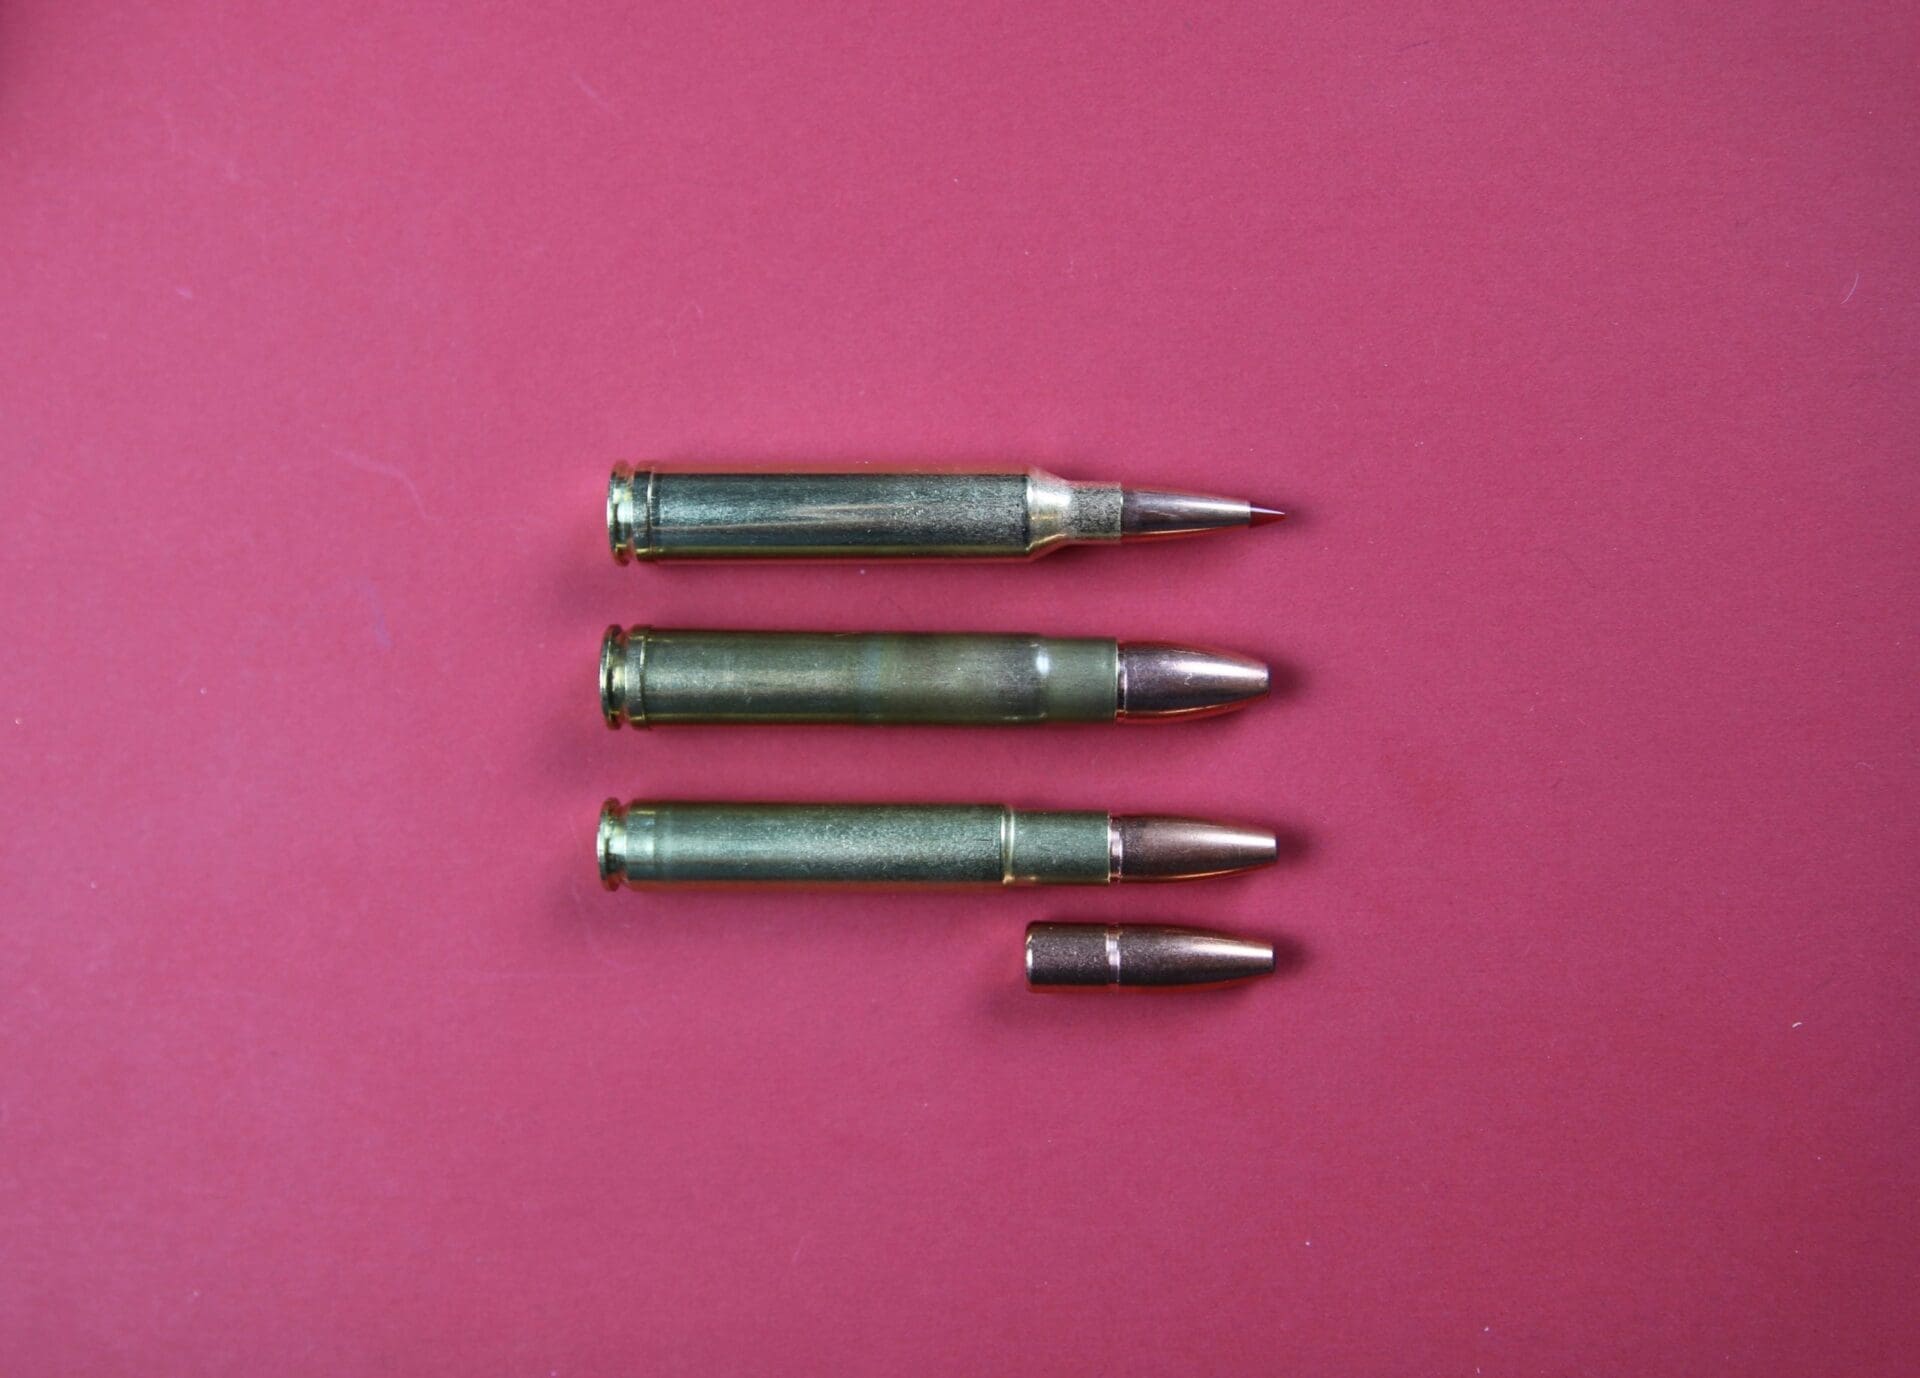 .35 Whelen Improved swift a-frame bullets